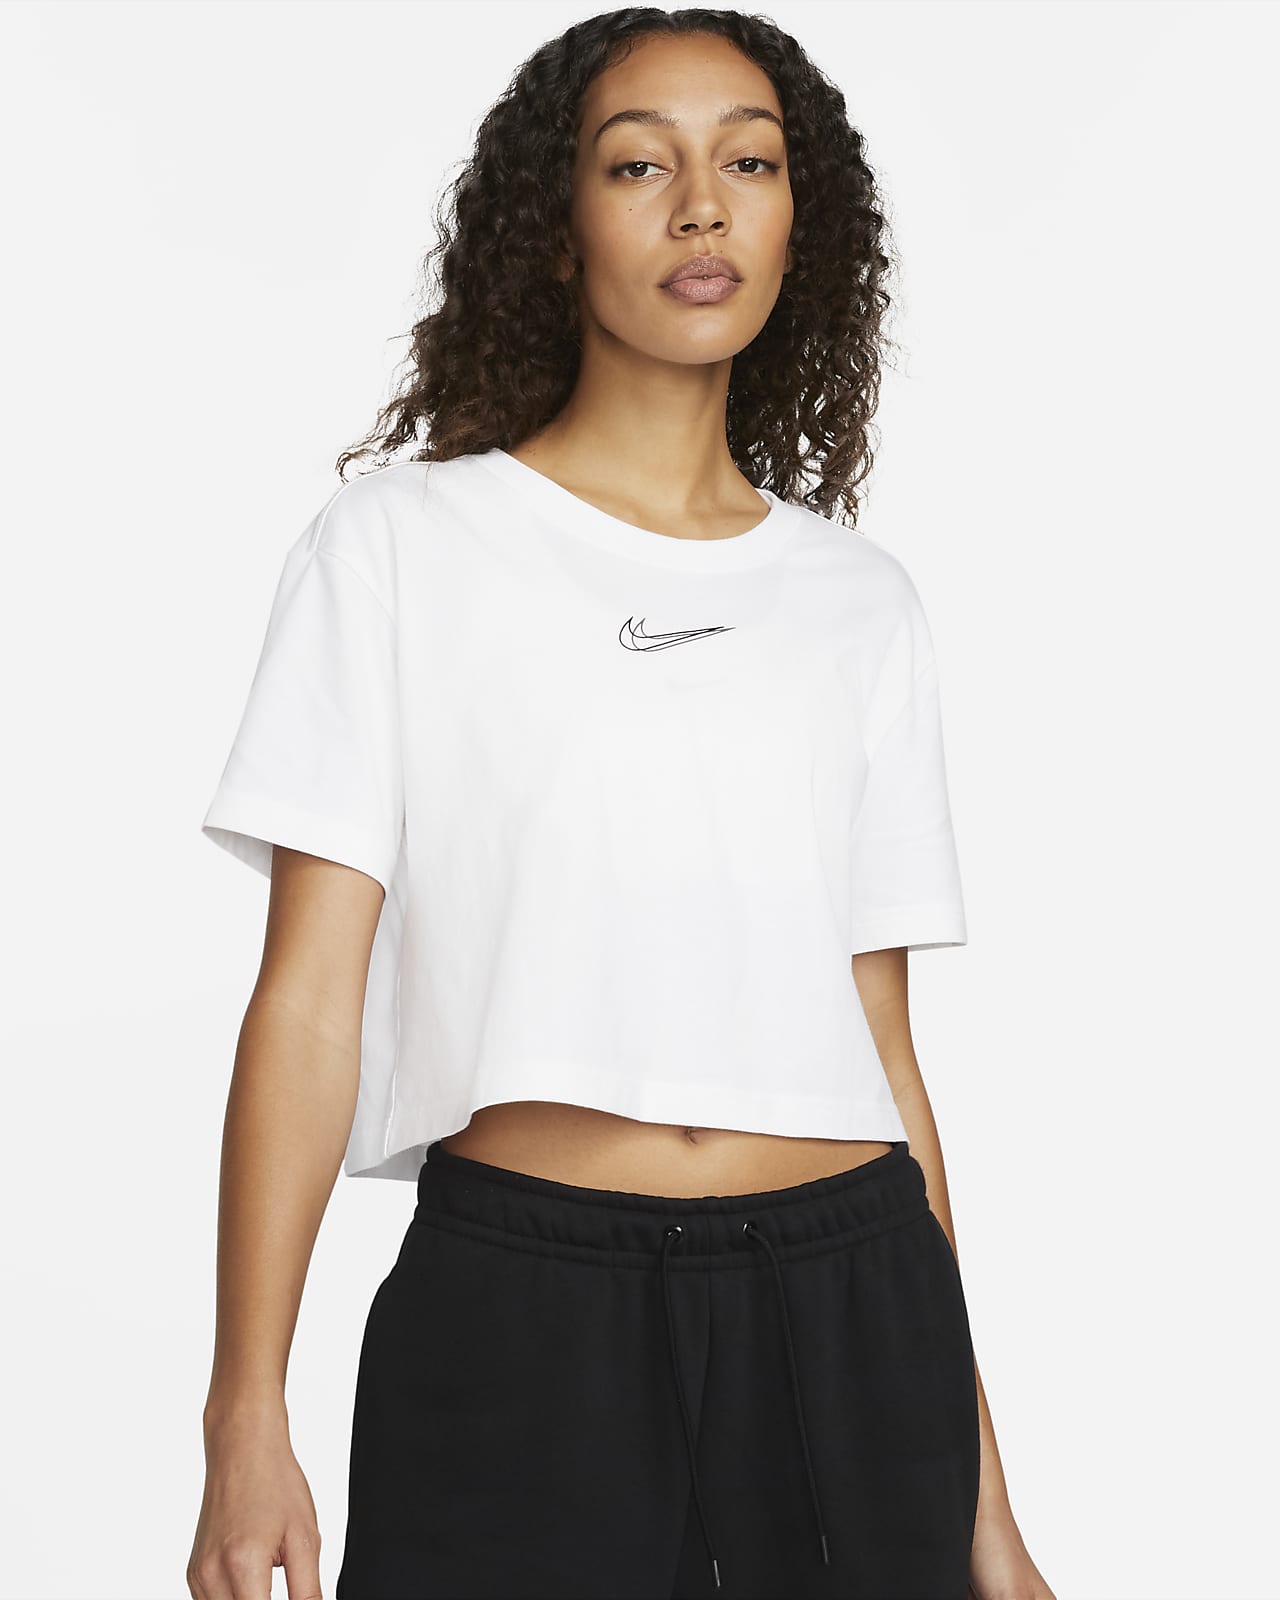 Nike Sportswear Women's Cropped Dance T-Shirt